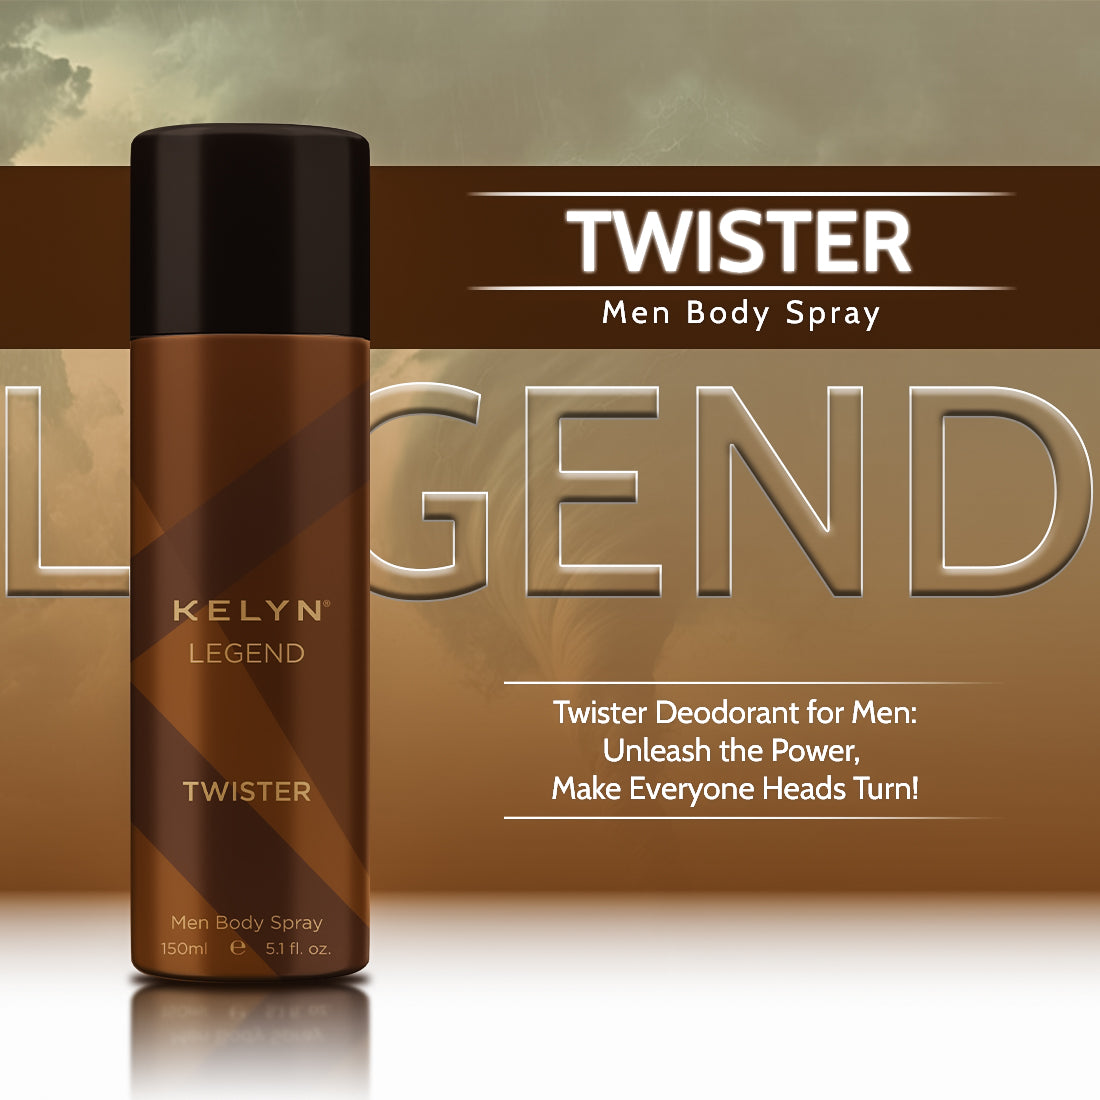 Legend Twister Deodorant for Men Body Spray, 150 ml